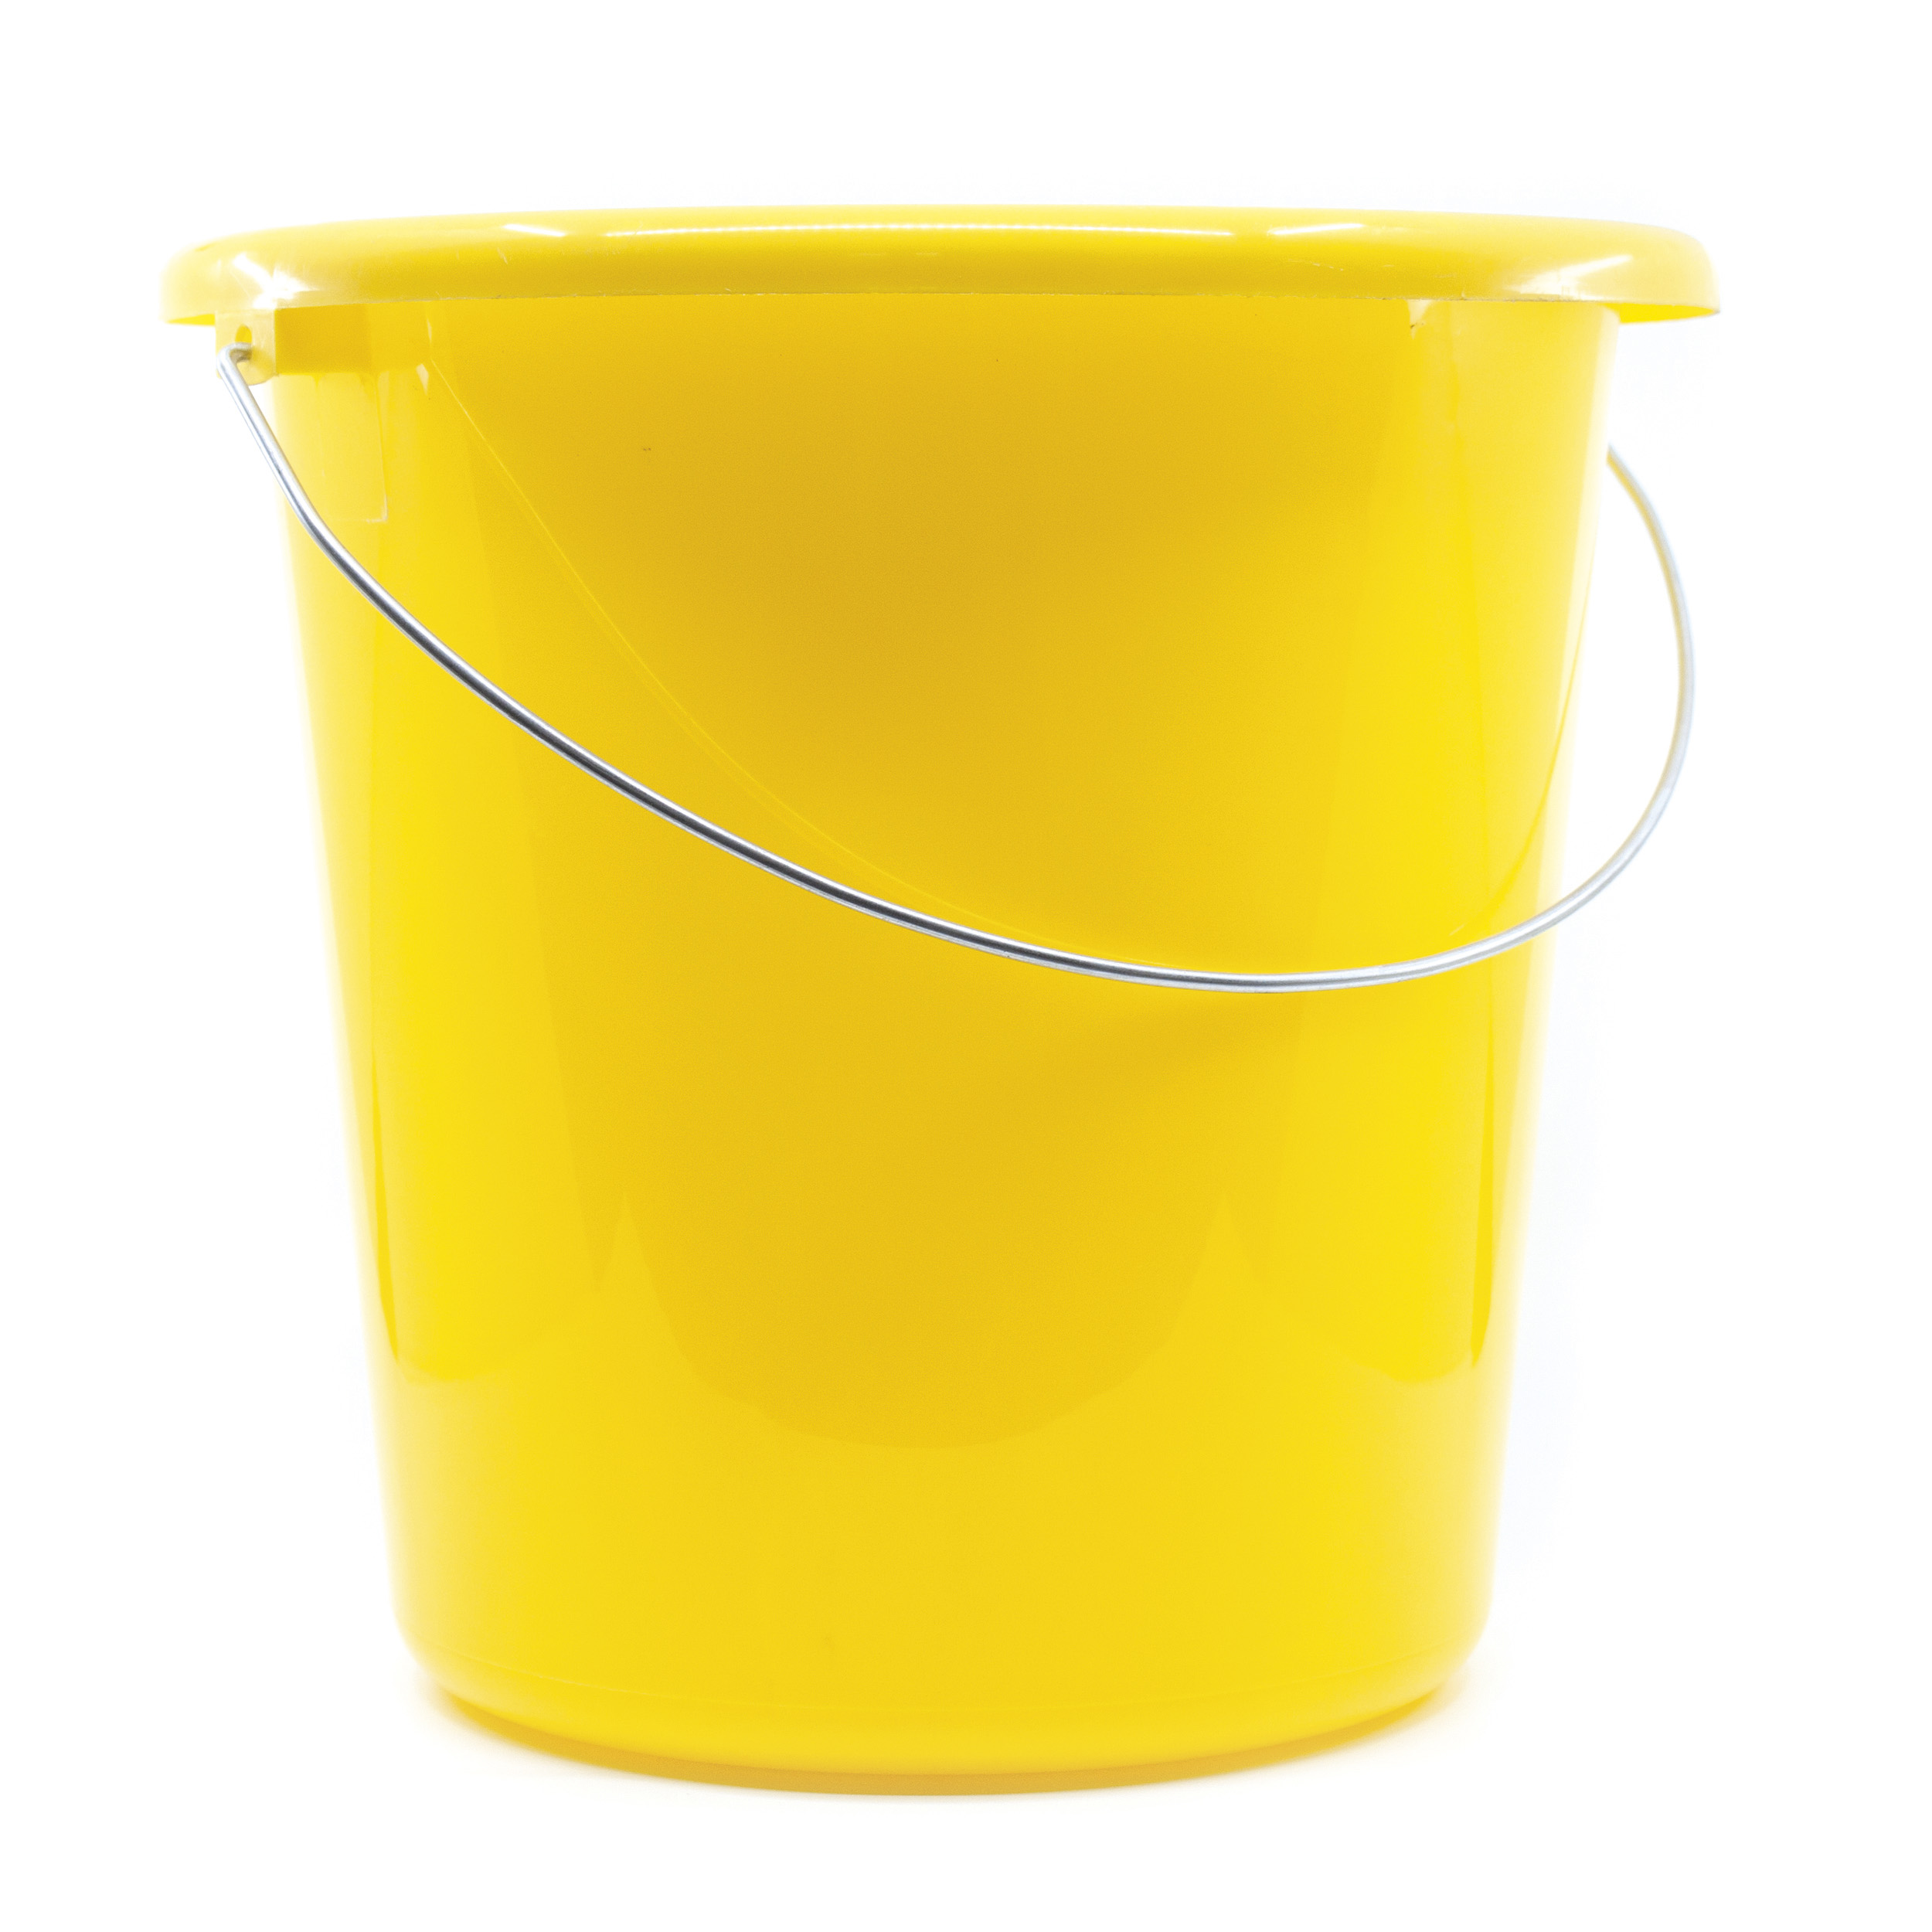 Haushaltseimer 5L mit Metallbügel Farbe: gelb